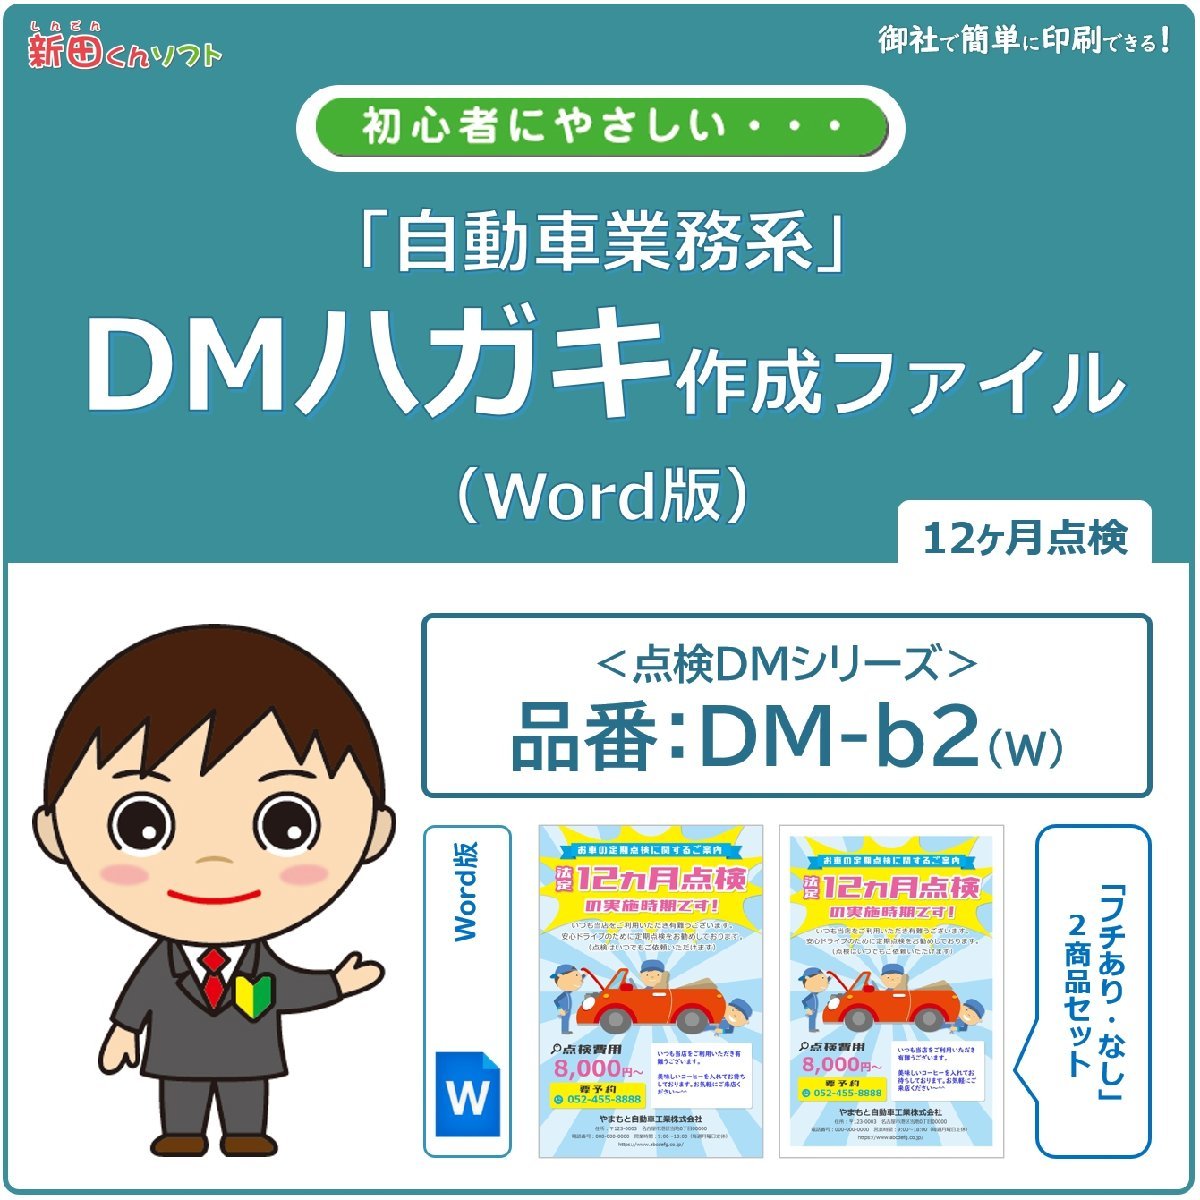 DM‐b2w 定期点検のお知らせ DM作成ファイル（Word版）12ヶ月点検 ハガキデザイン ダイレクトメール 販促ツール_画像1